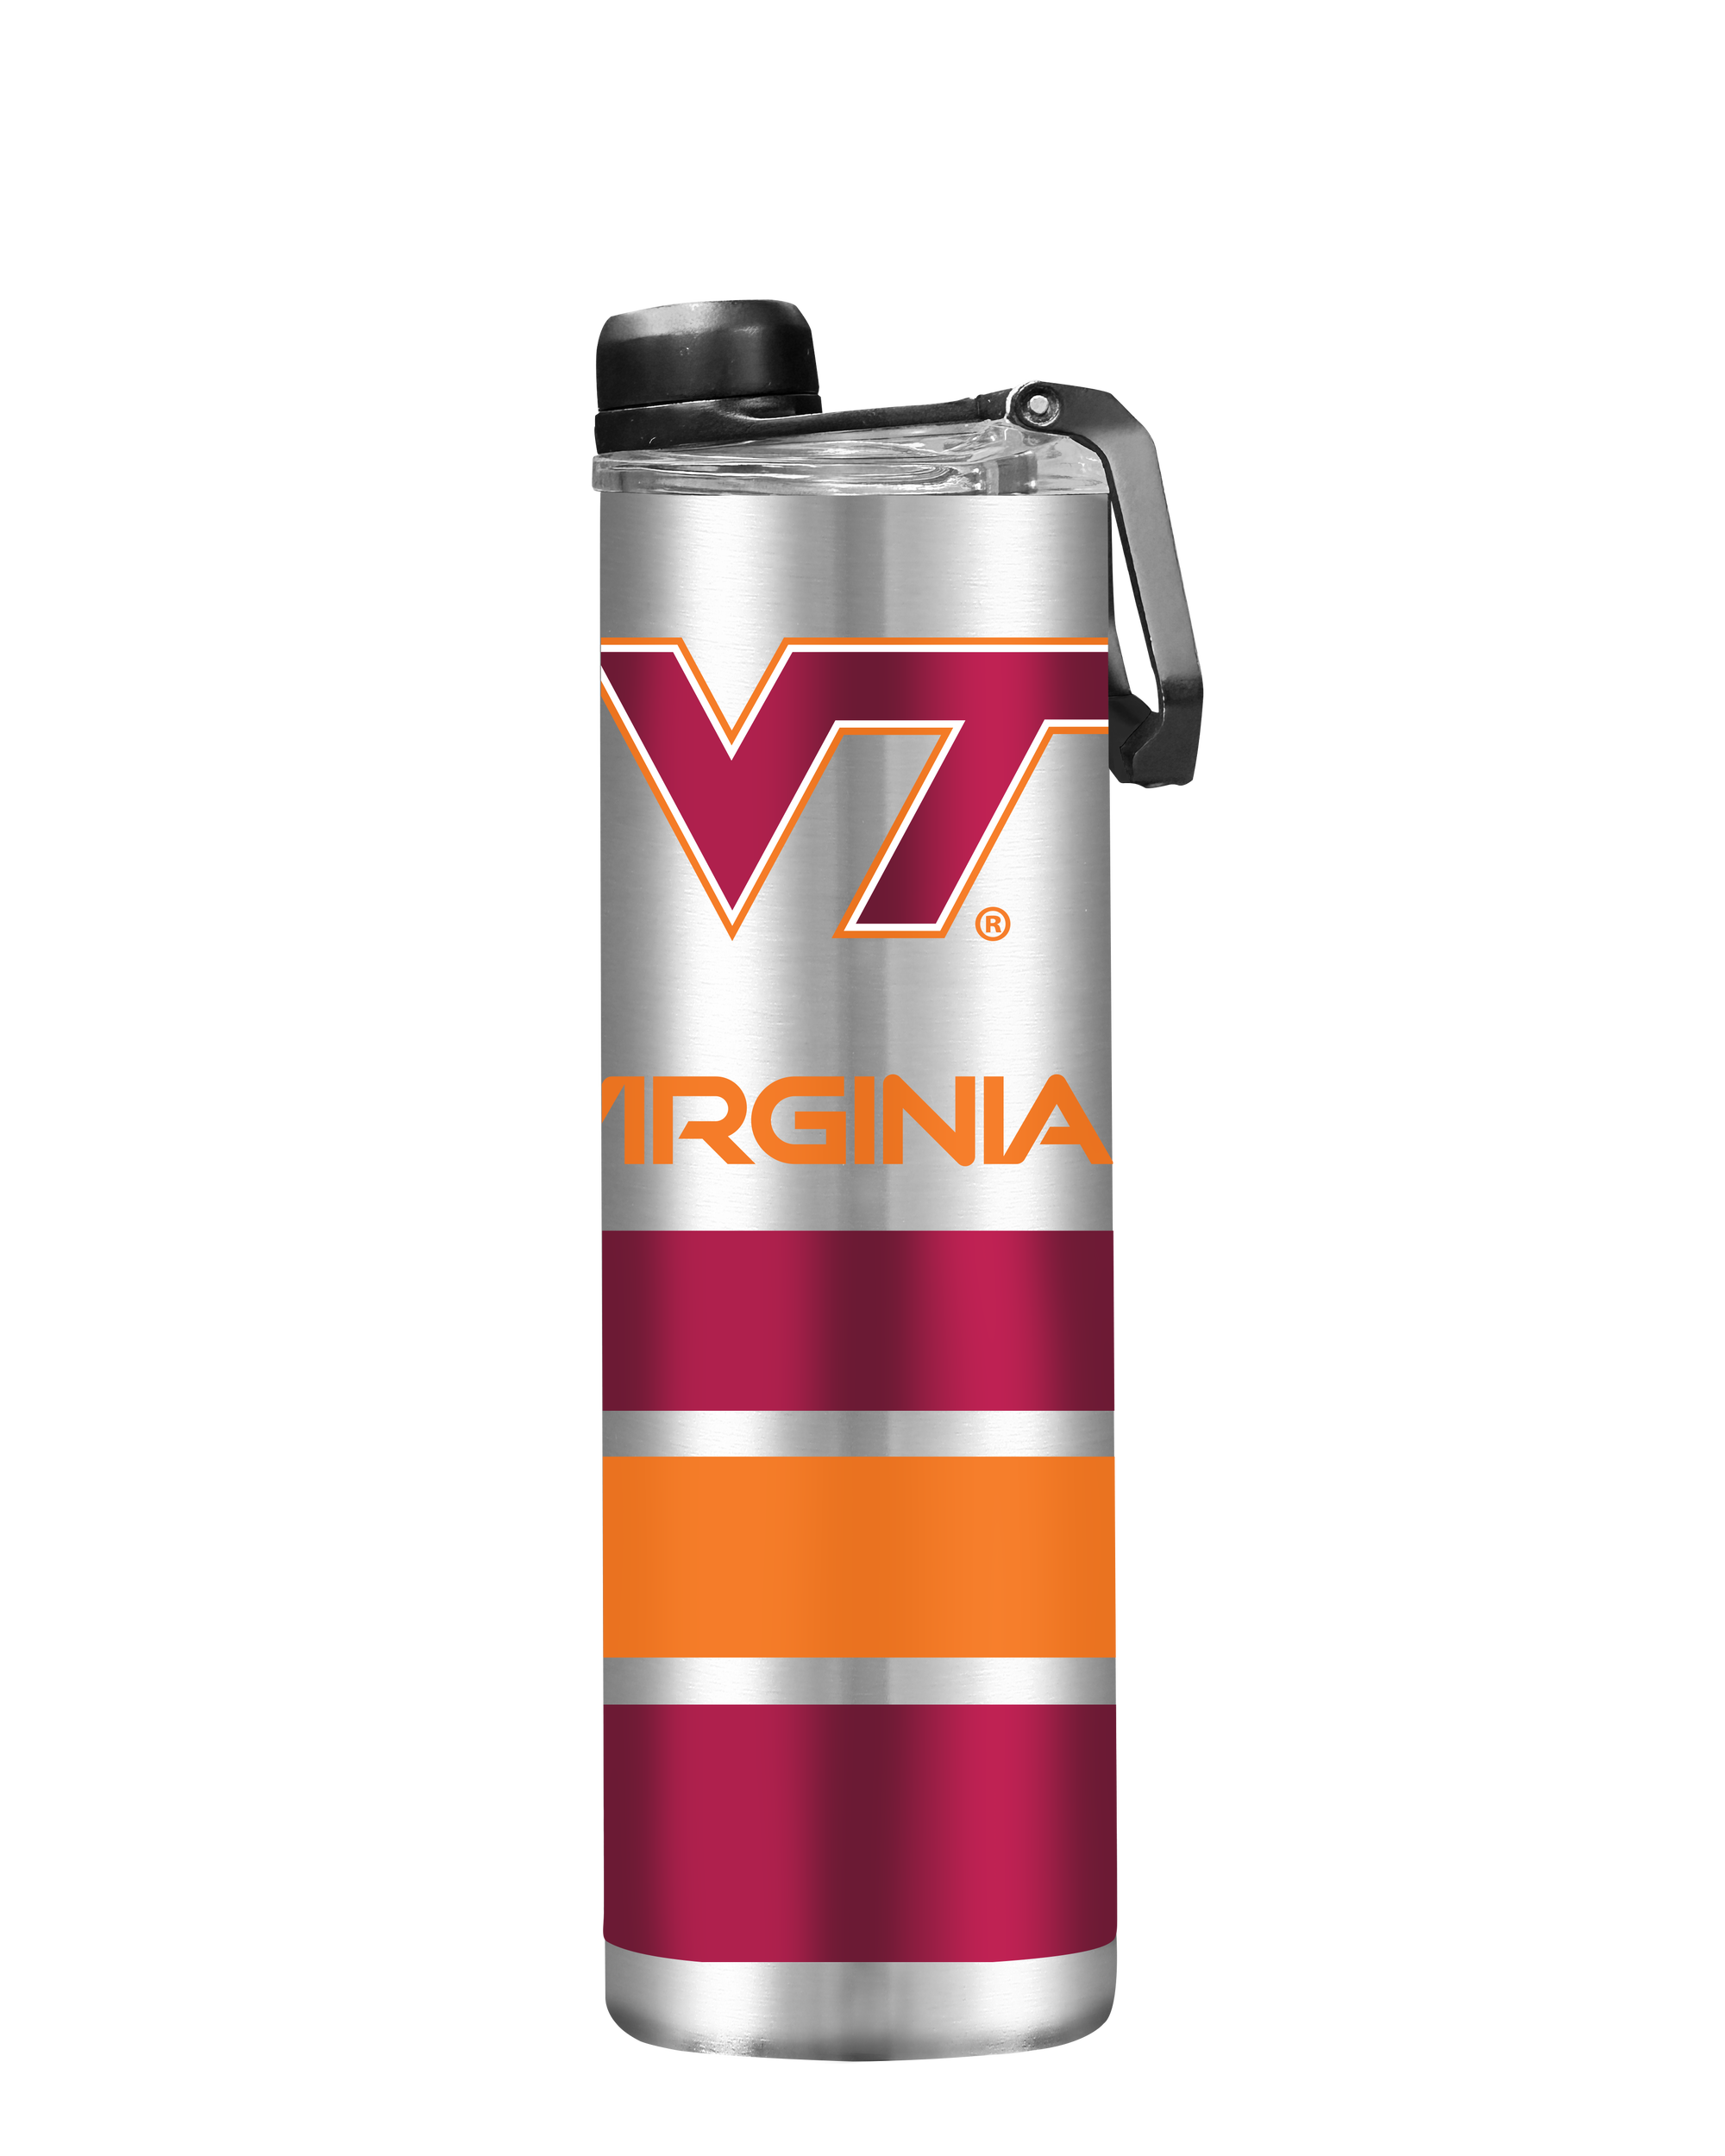 Virginia Tech 22oz Stainless Steel Bottle